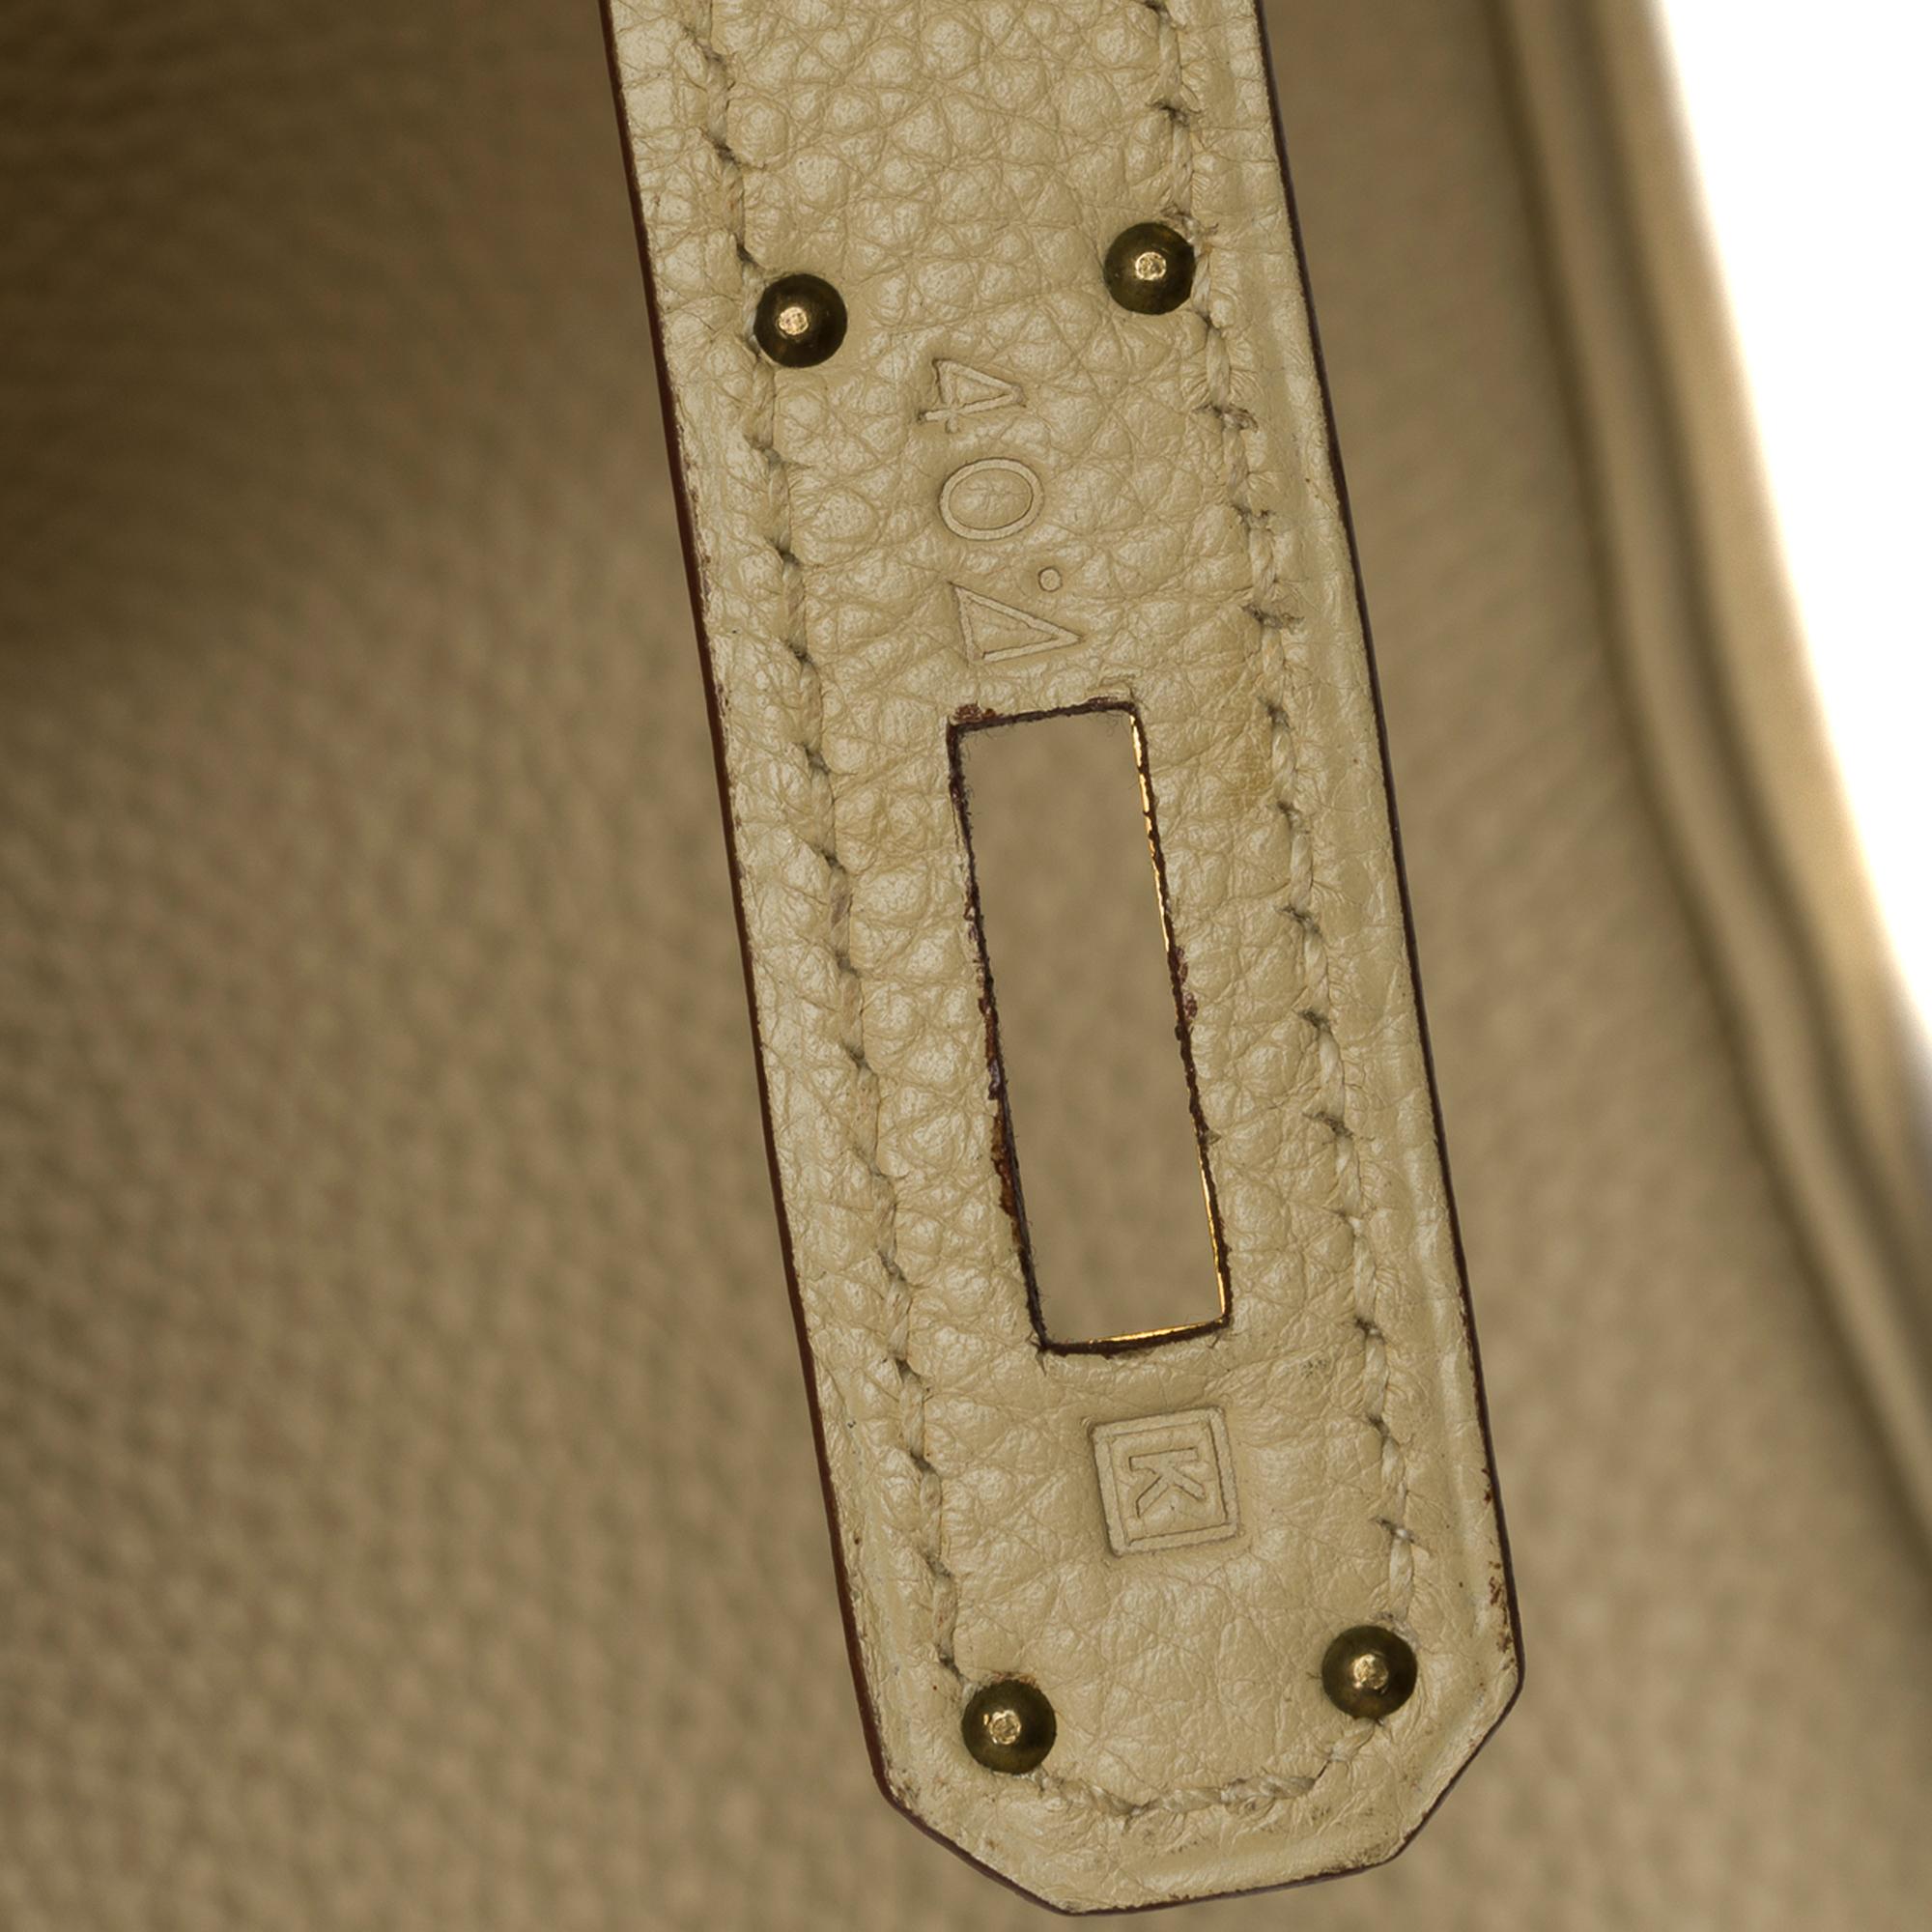 Amazing Hermès Birkin 35 handbag in Parchemin Togo leather, GHW 4